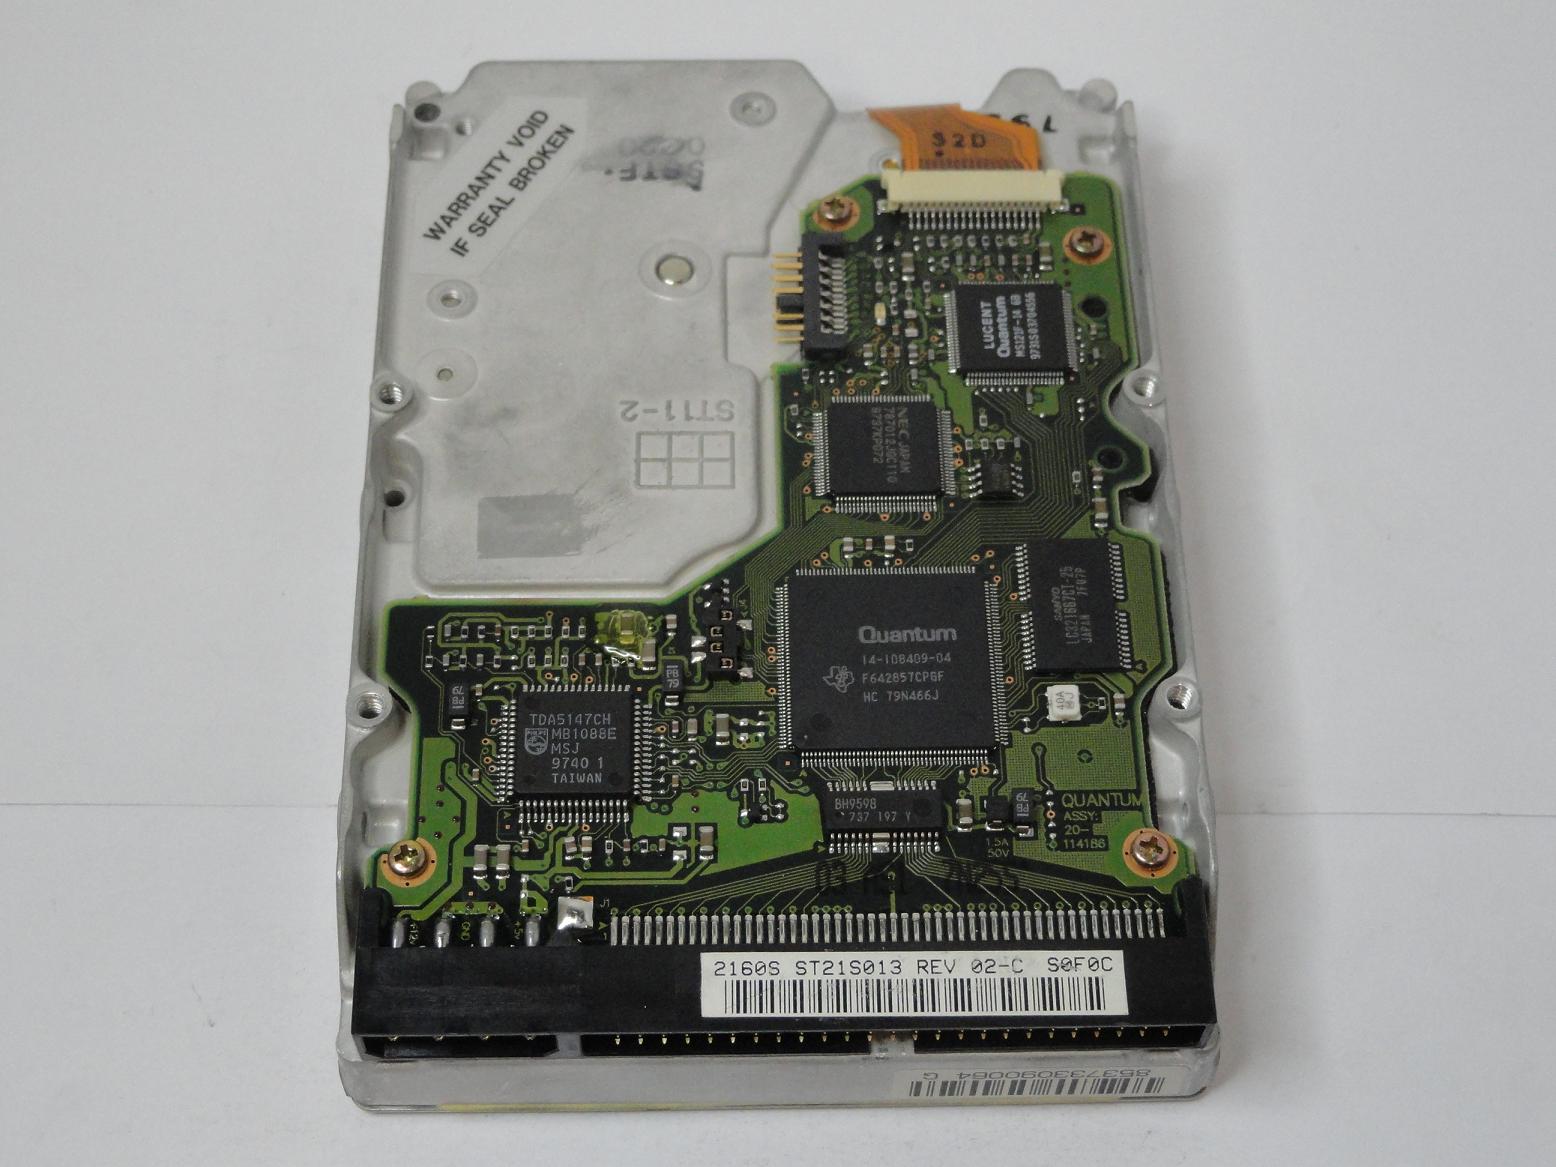 MC5416_ST21S013_Quantum 2.1Gb SCSI 50 Pin 5400rpm 3.5in HDD - Image3